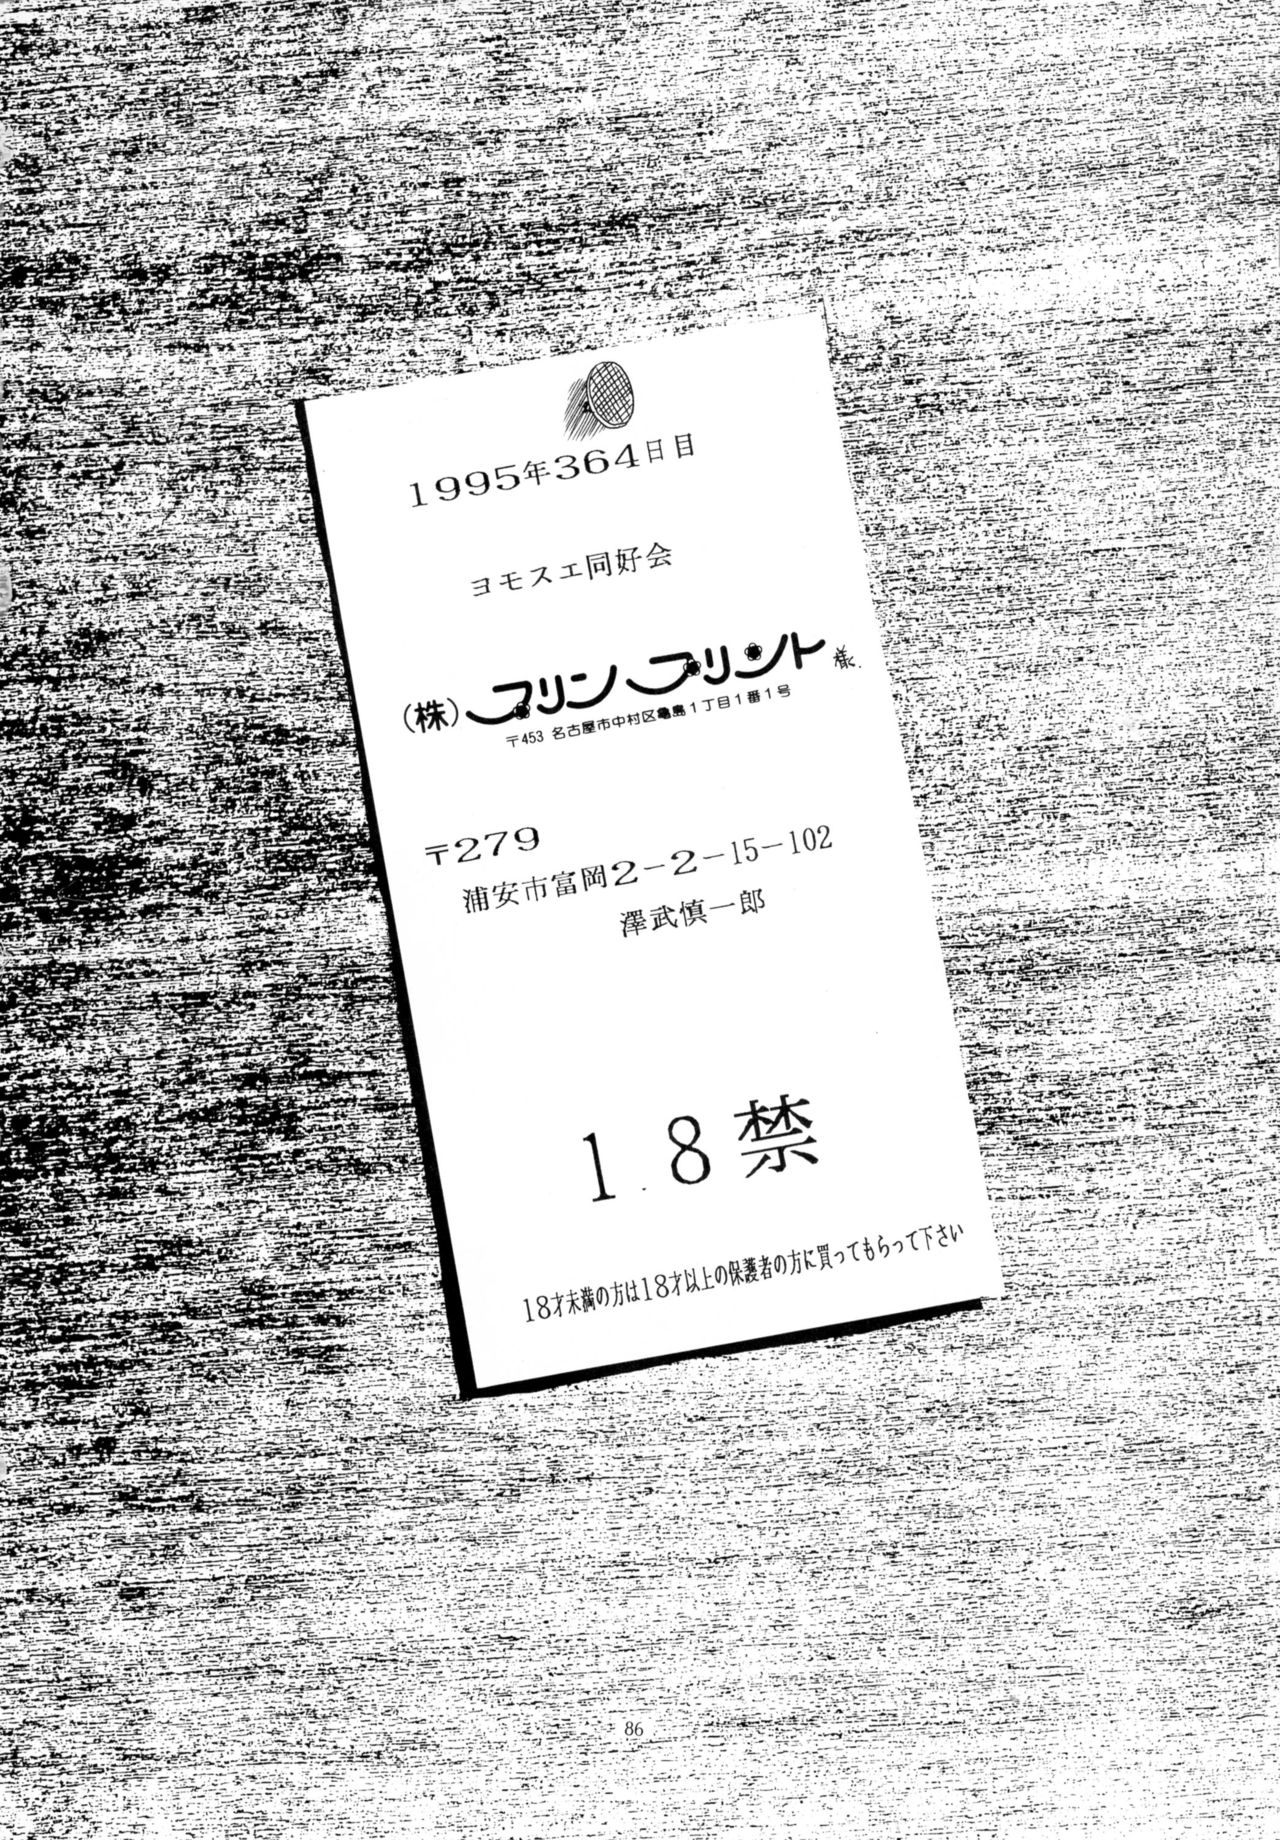 (C49) [ヨモスエ同好会 (げしょ一郎)] THE OMNIVOUS 09